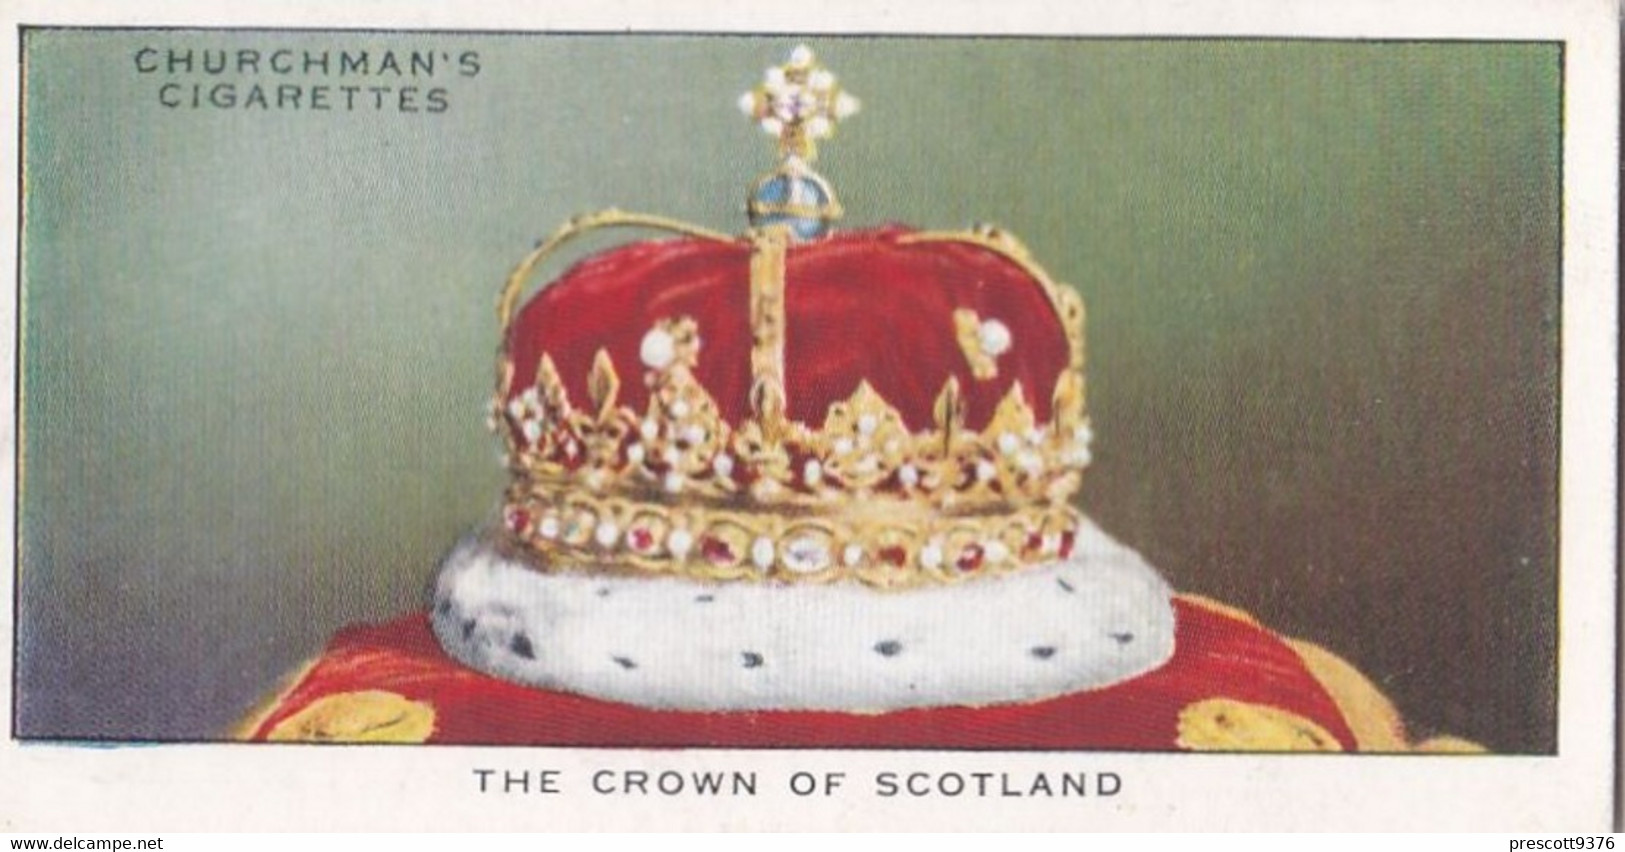 The Kings Coronation 1937 - 38 Crown Of Scotland - Churchman Cigarette Card - Original - Royalty - Churchman